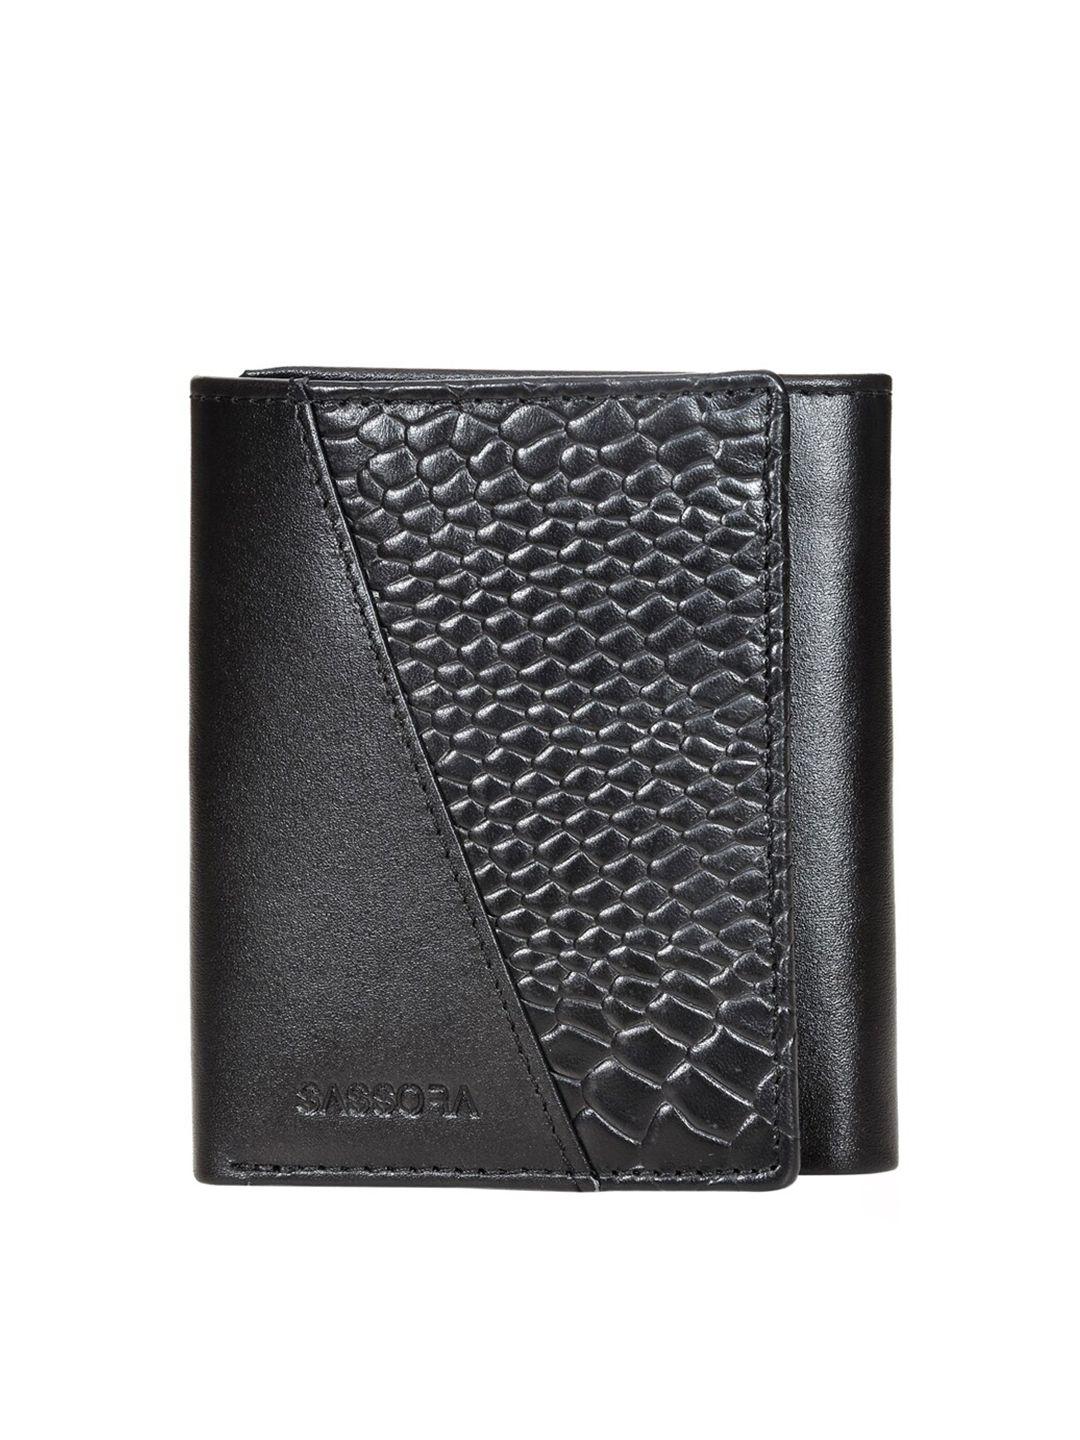 sassora men black textured leather three fold wallet